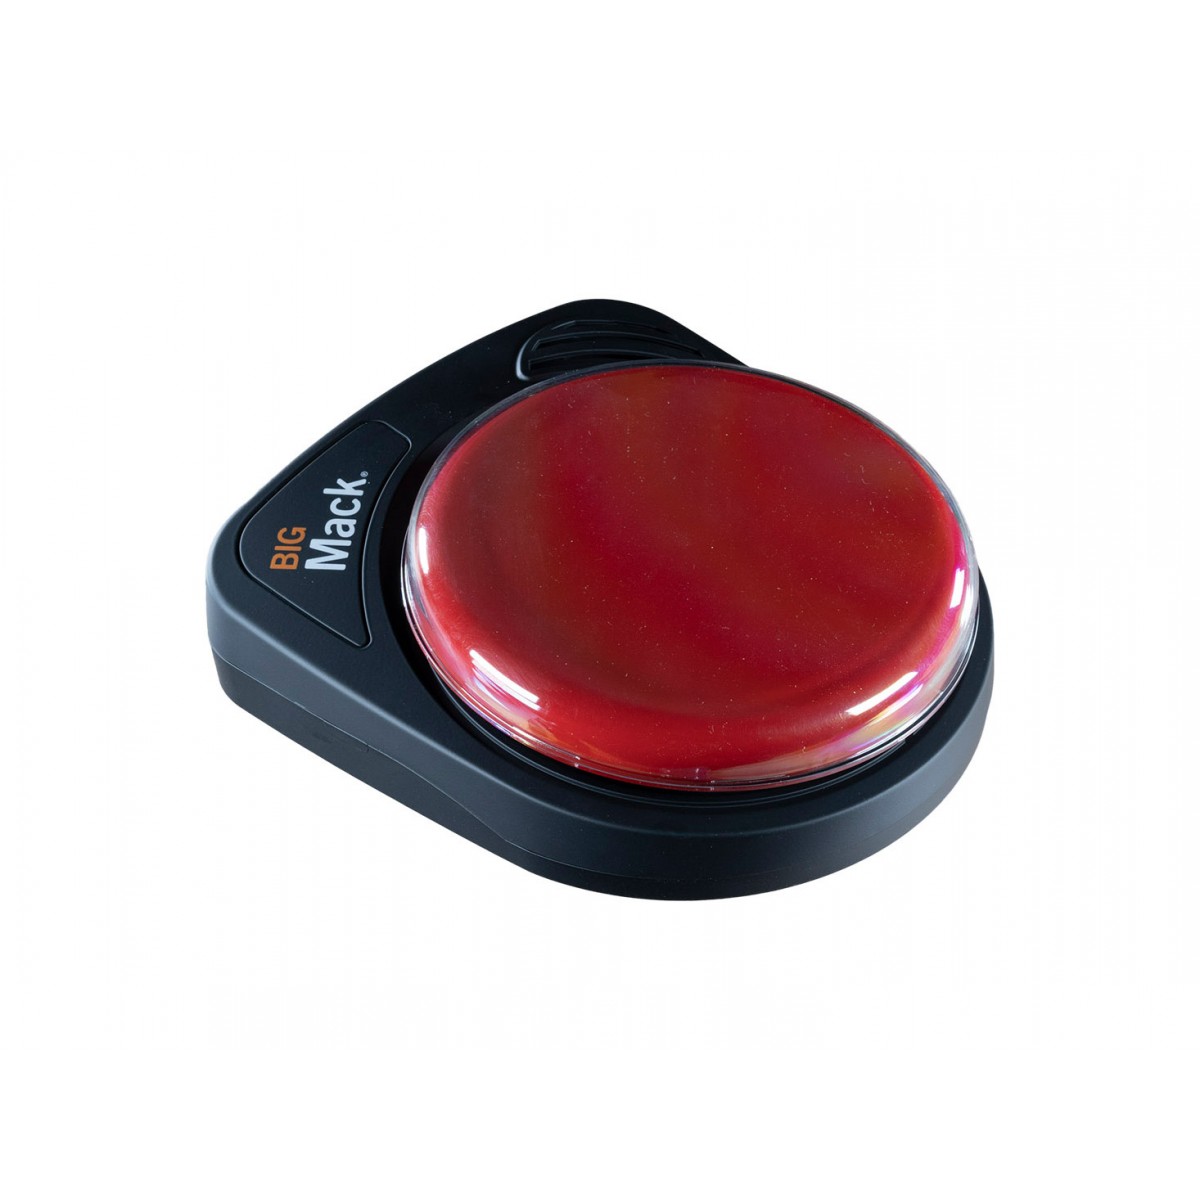 NEW Bigmack Communicator - Multi-Color - Probe diameter: 127 mm• Trigger force: 113 g• Language memory: 120 seconds.